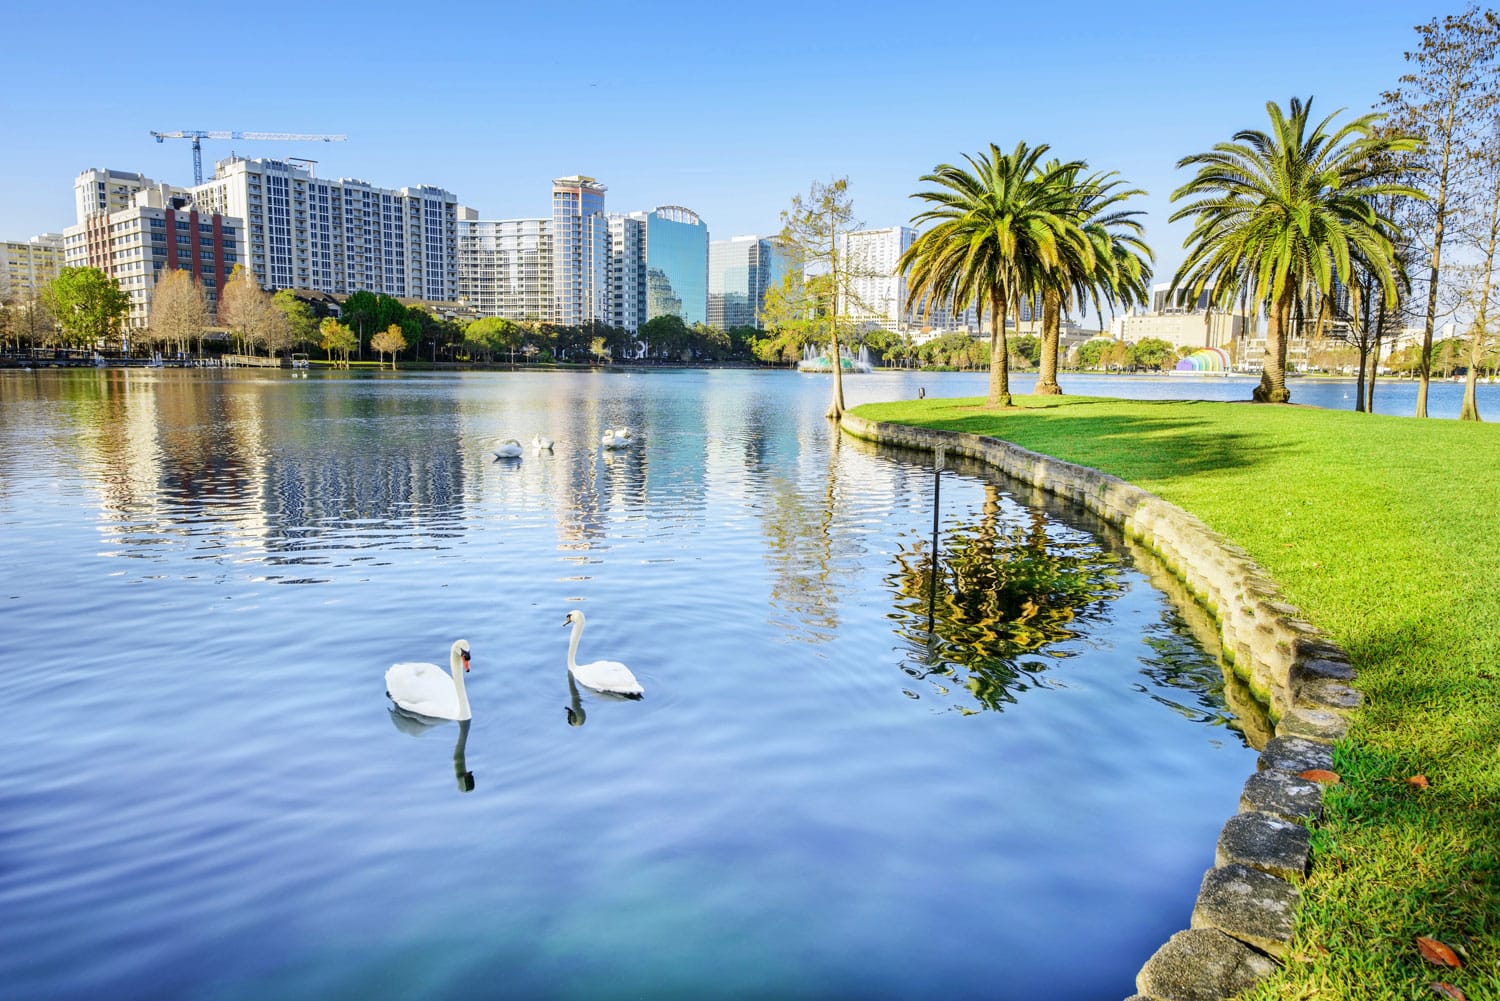 Lake Eola Park in Orlando, Florida